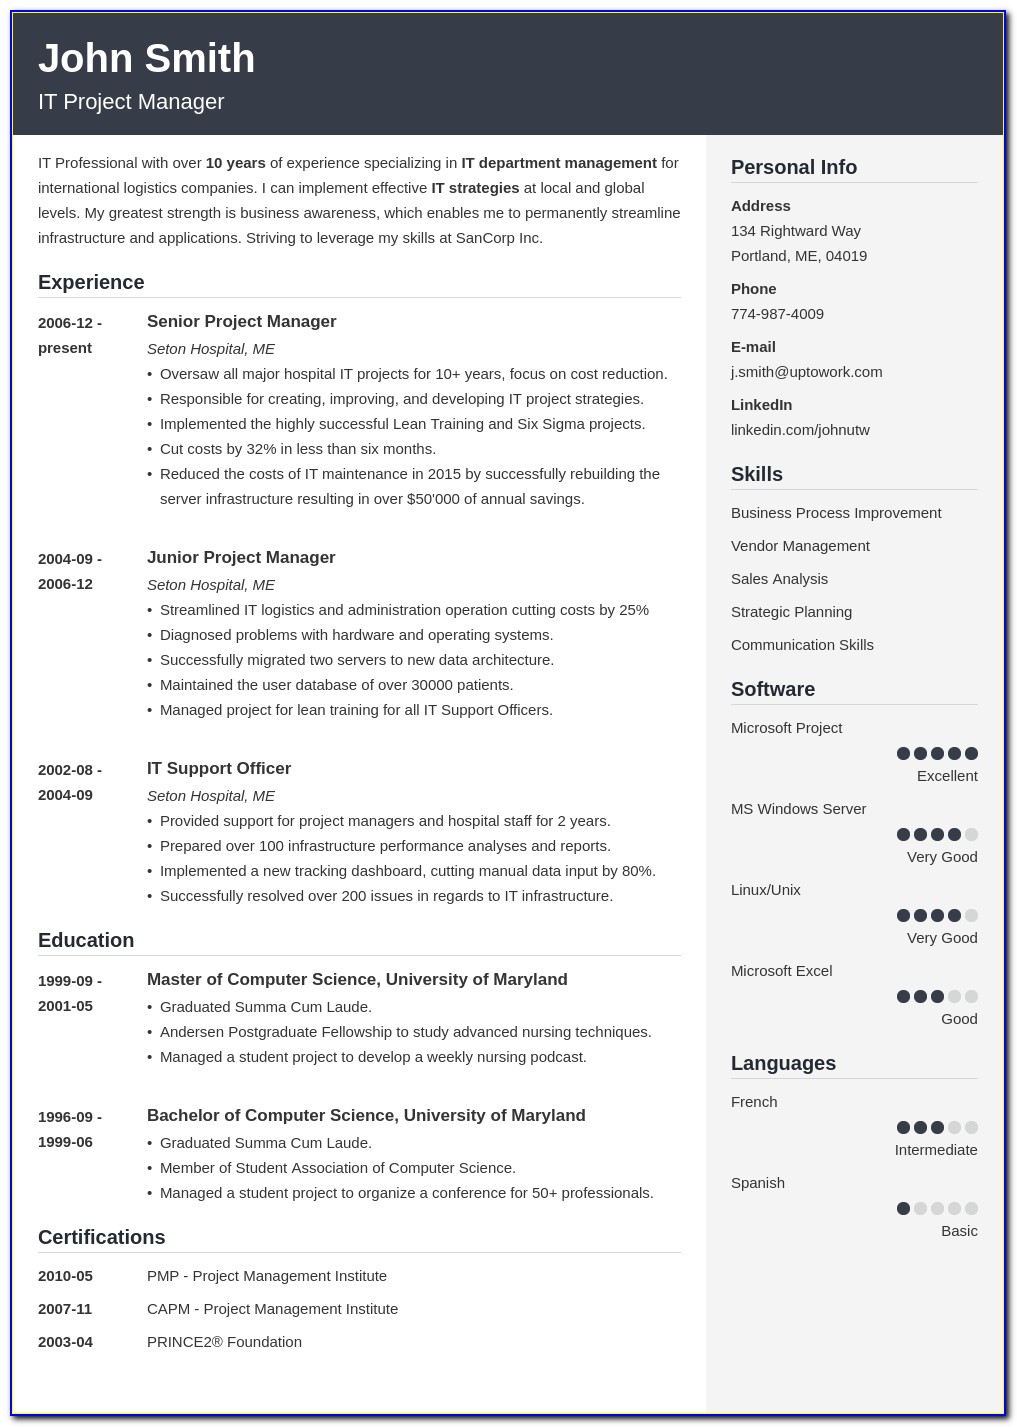 Resume Builder Professional Summary